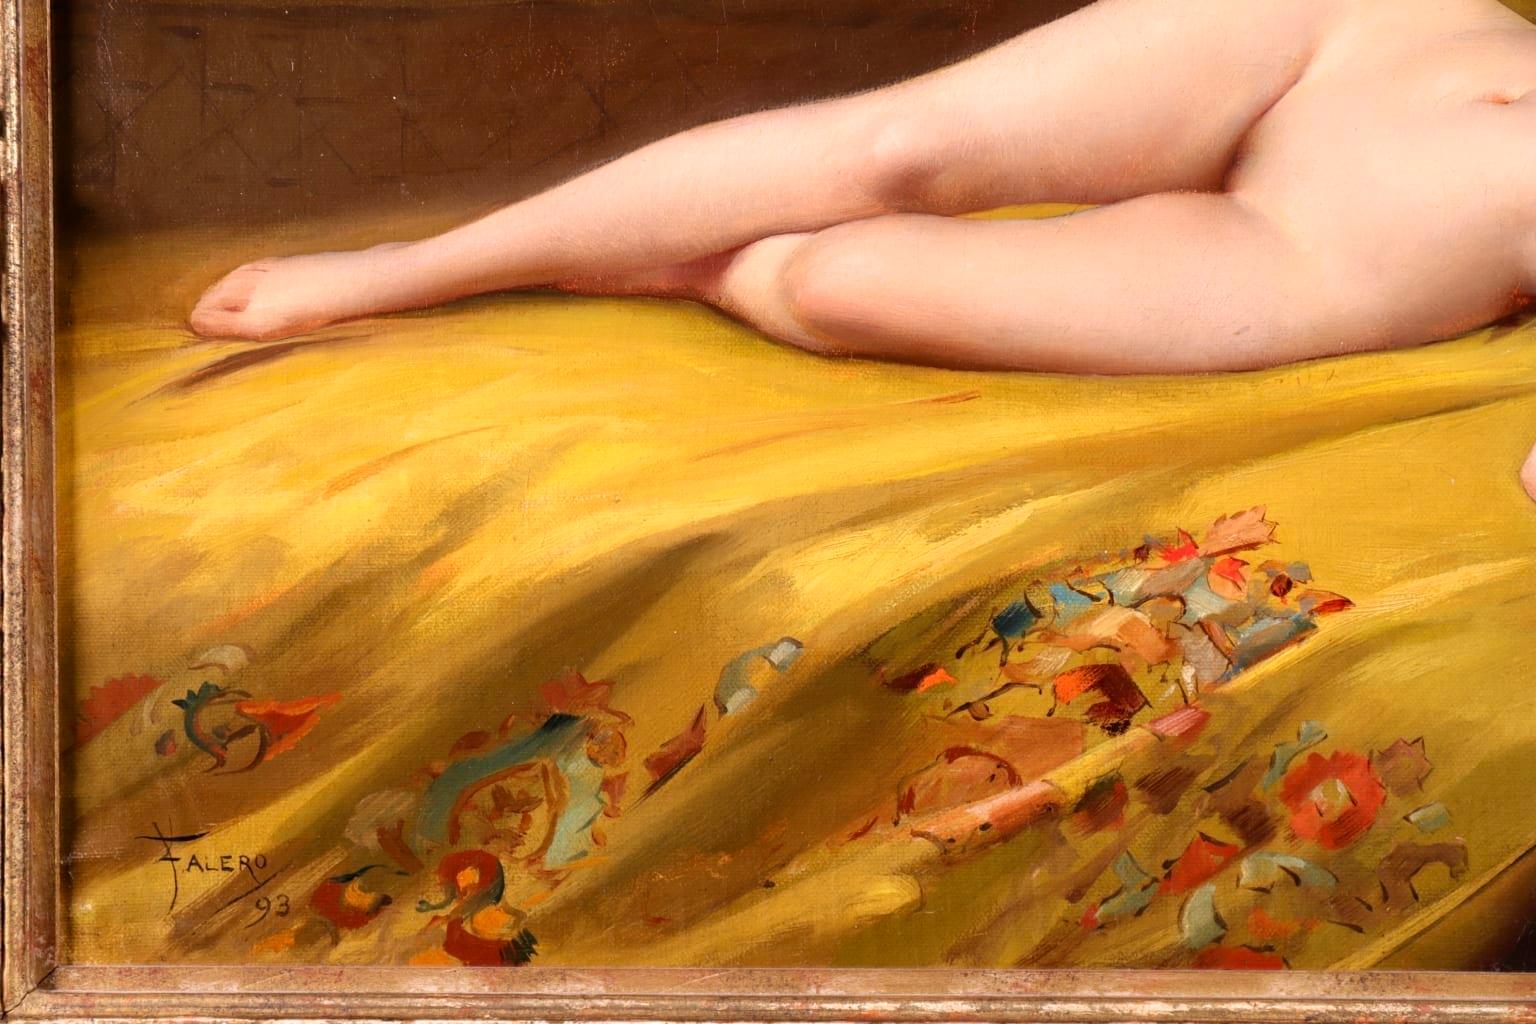 Seduction - Orientalist Oil, Nude Female Figure in Interior by Luis Falero - Orange Nude Painting by Luis Ricardo Falero